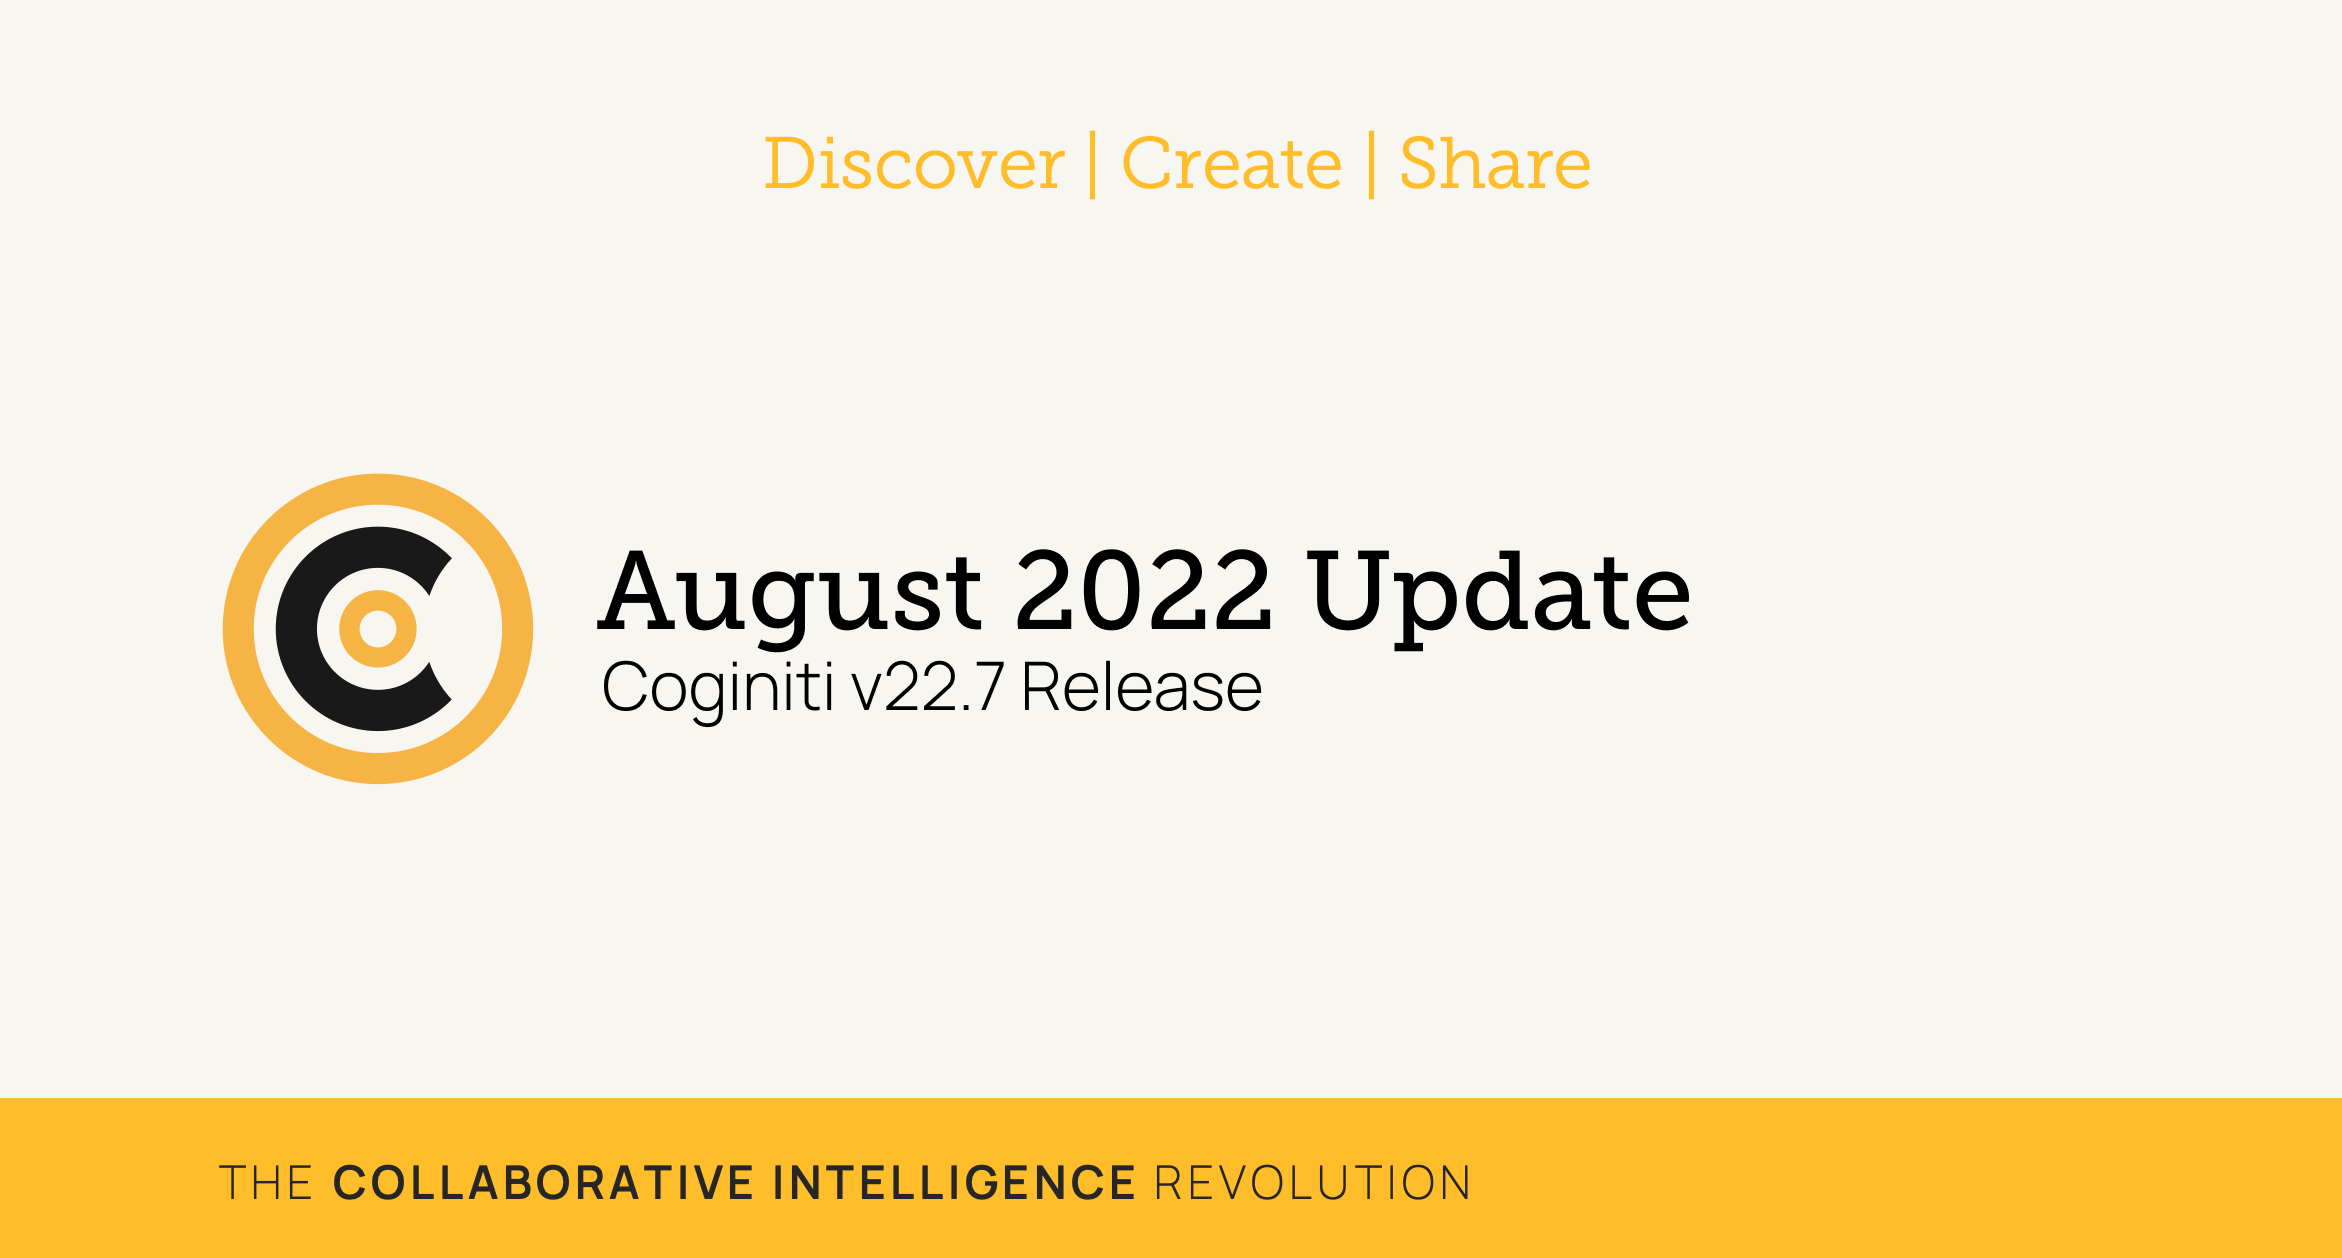 Coginiti August 2022 update announcement